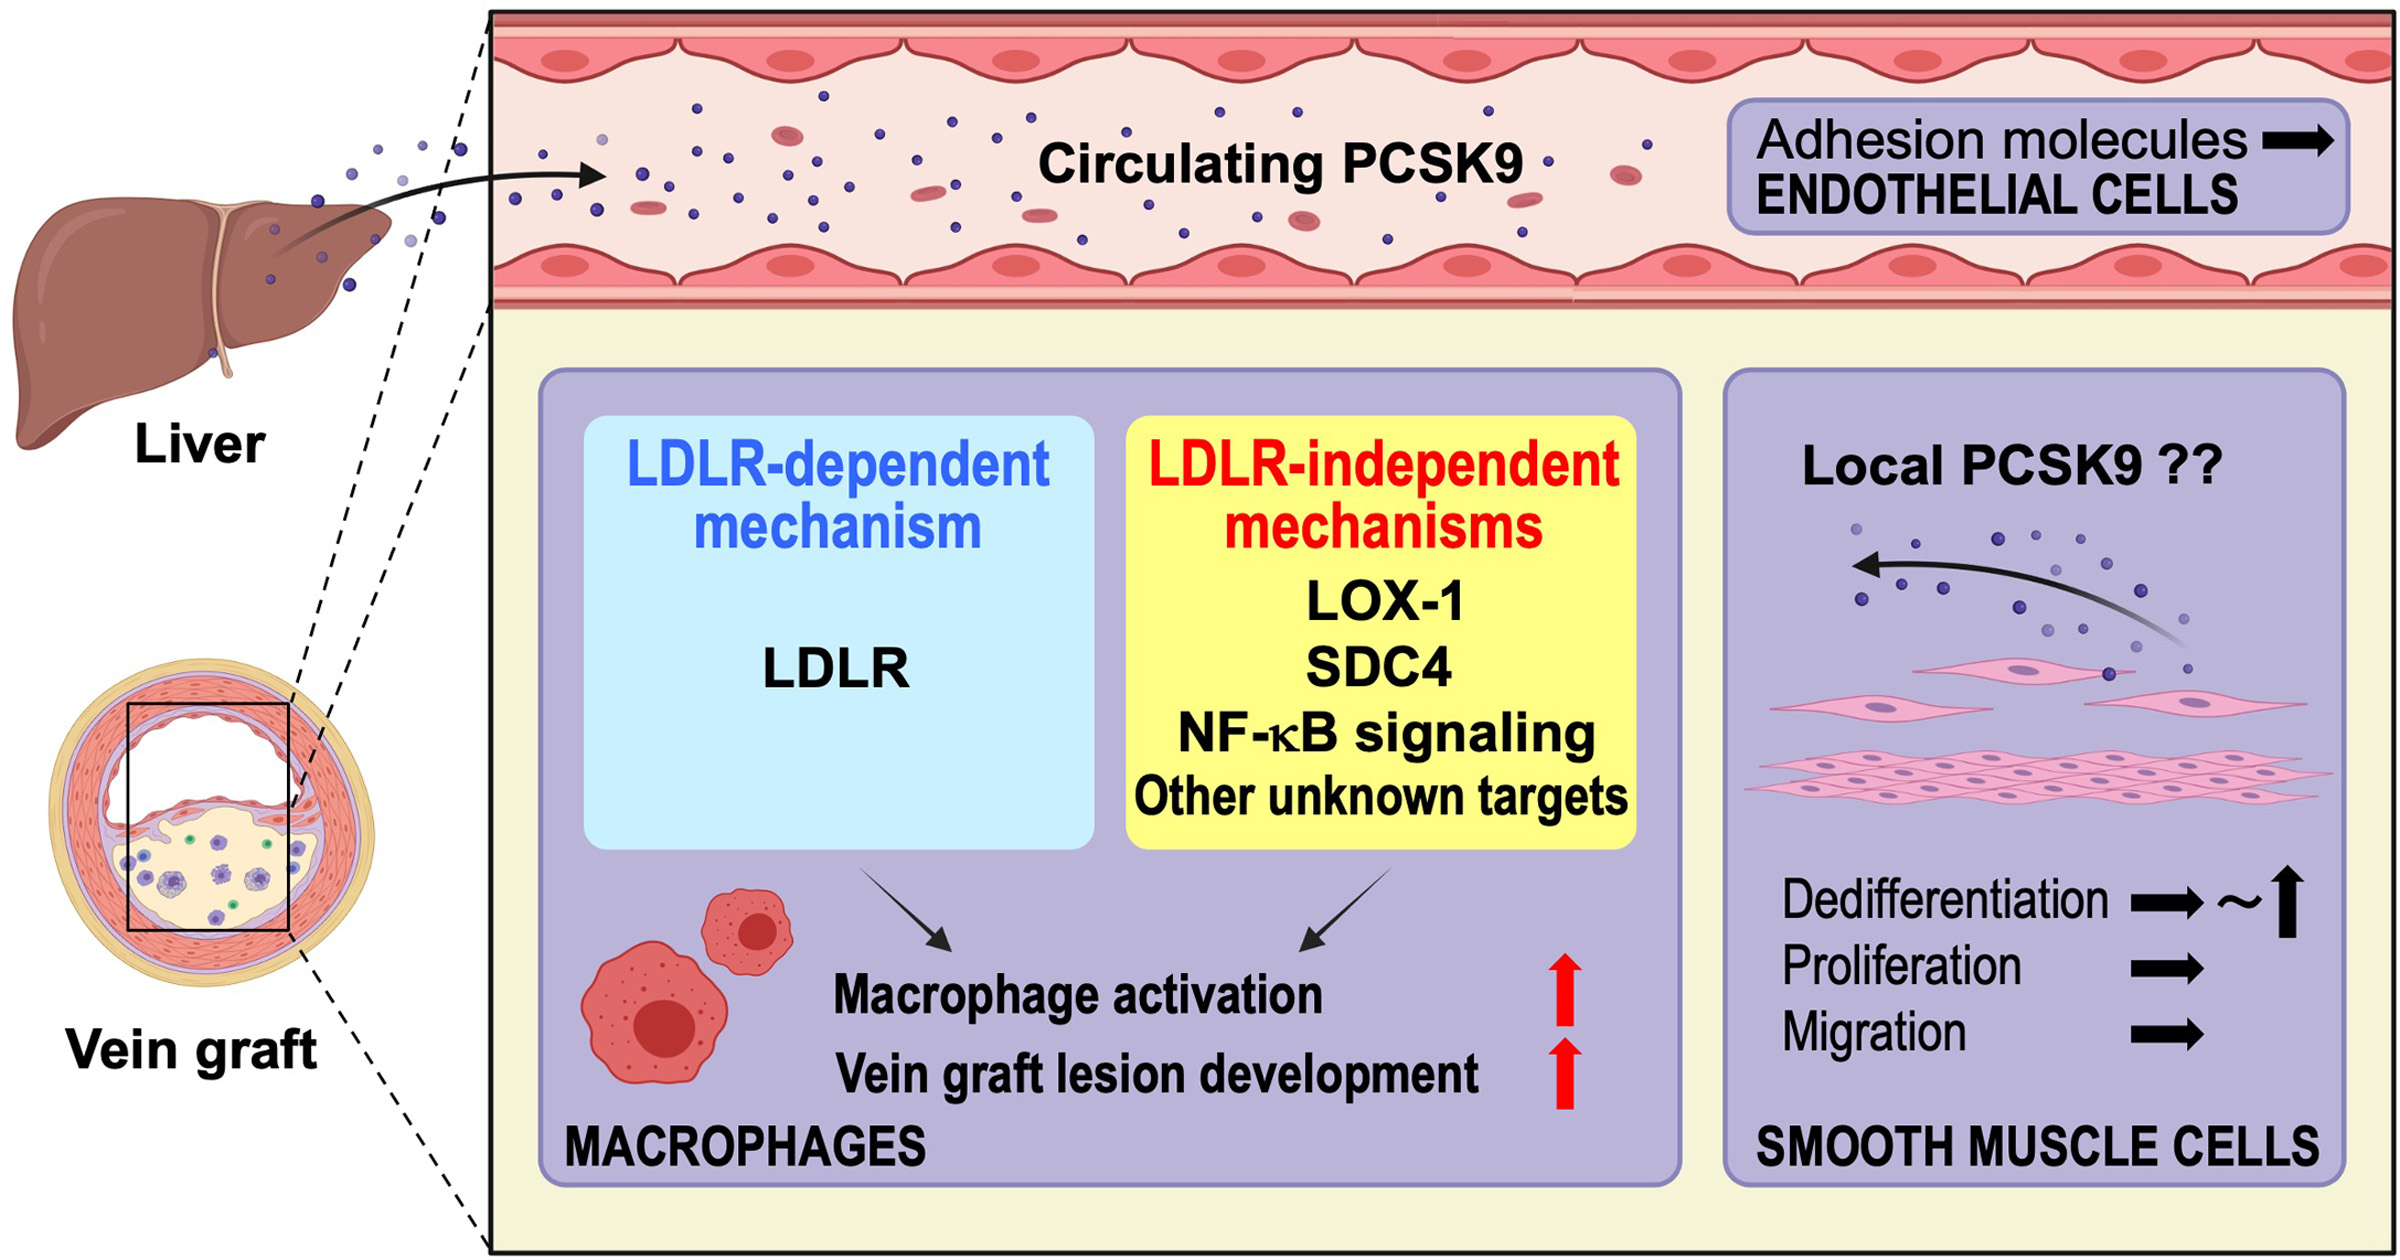 Proprotein Convertase Subtilisin/Kexin 9 (PCSK9) Promotes Macrophage Activation via LDL Receptor-Independent Mechanisms